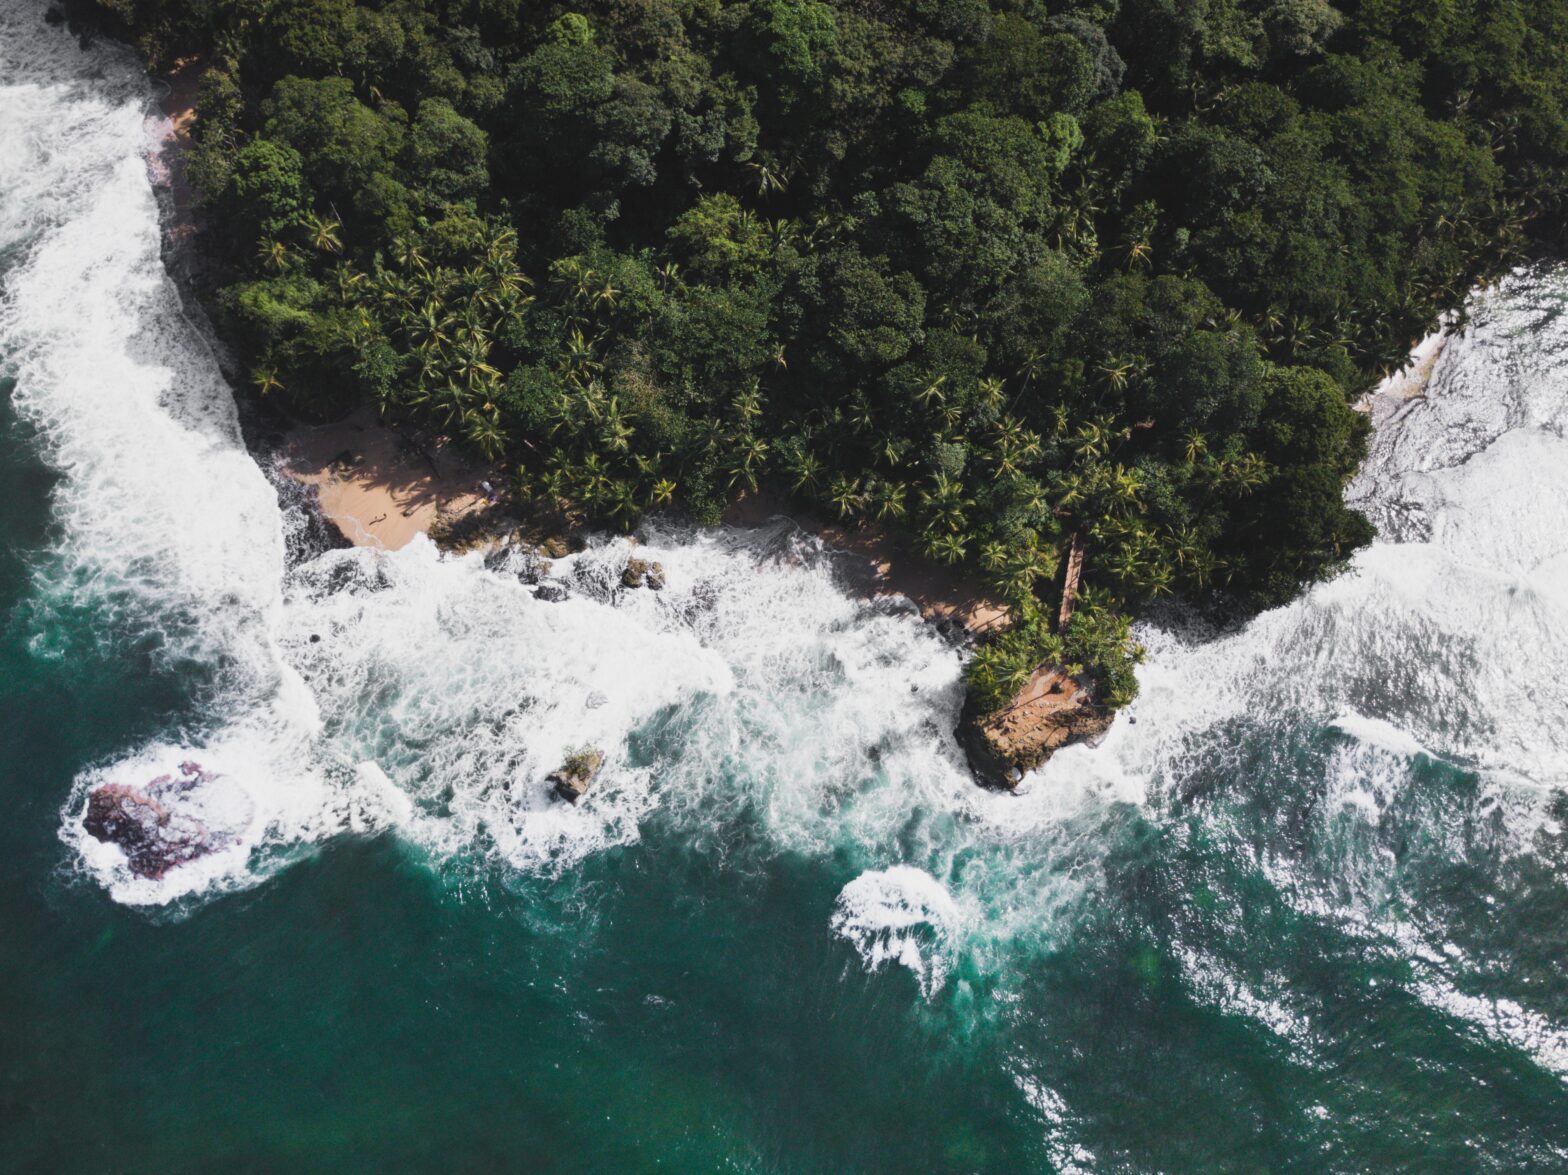 Limón, Costa Rica Travel Guide: Find Your Caribbean Rainforest Adventure